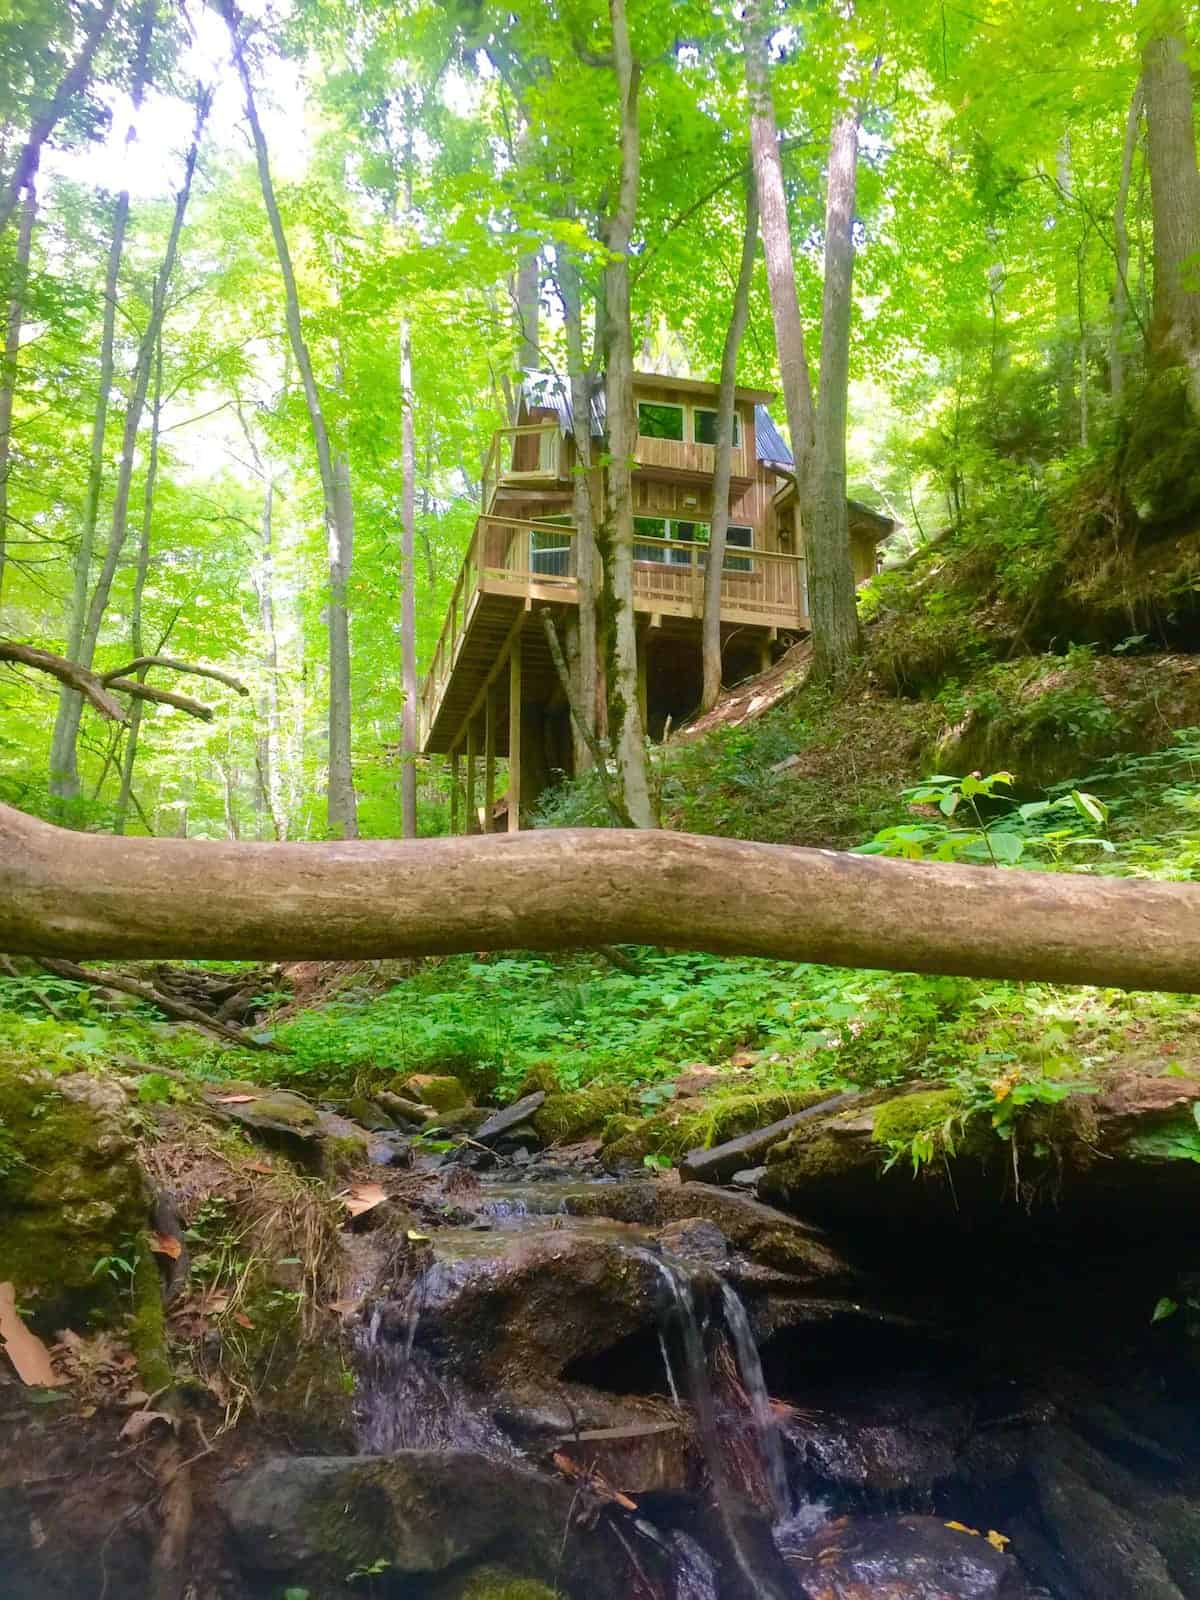 Image of treehouse rental in North Carolina